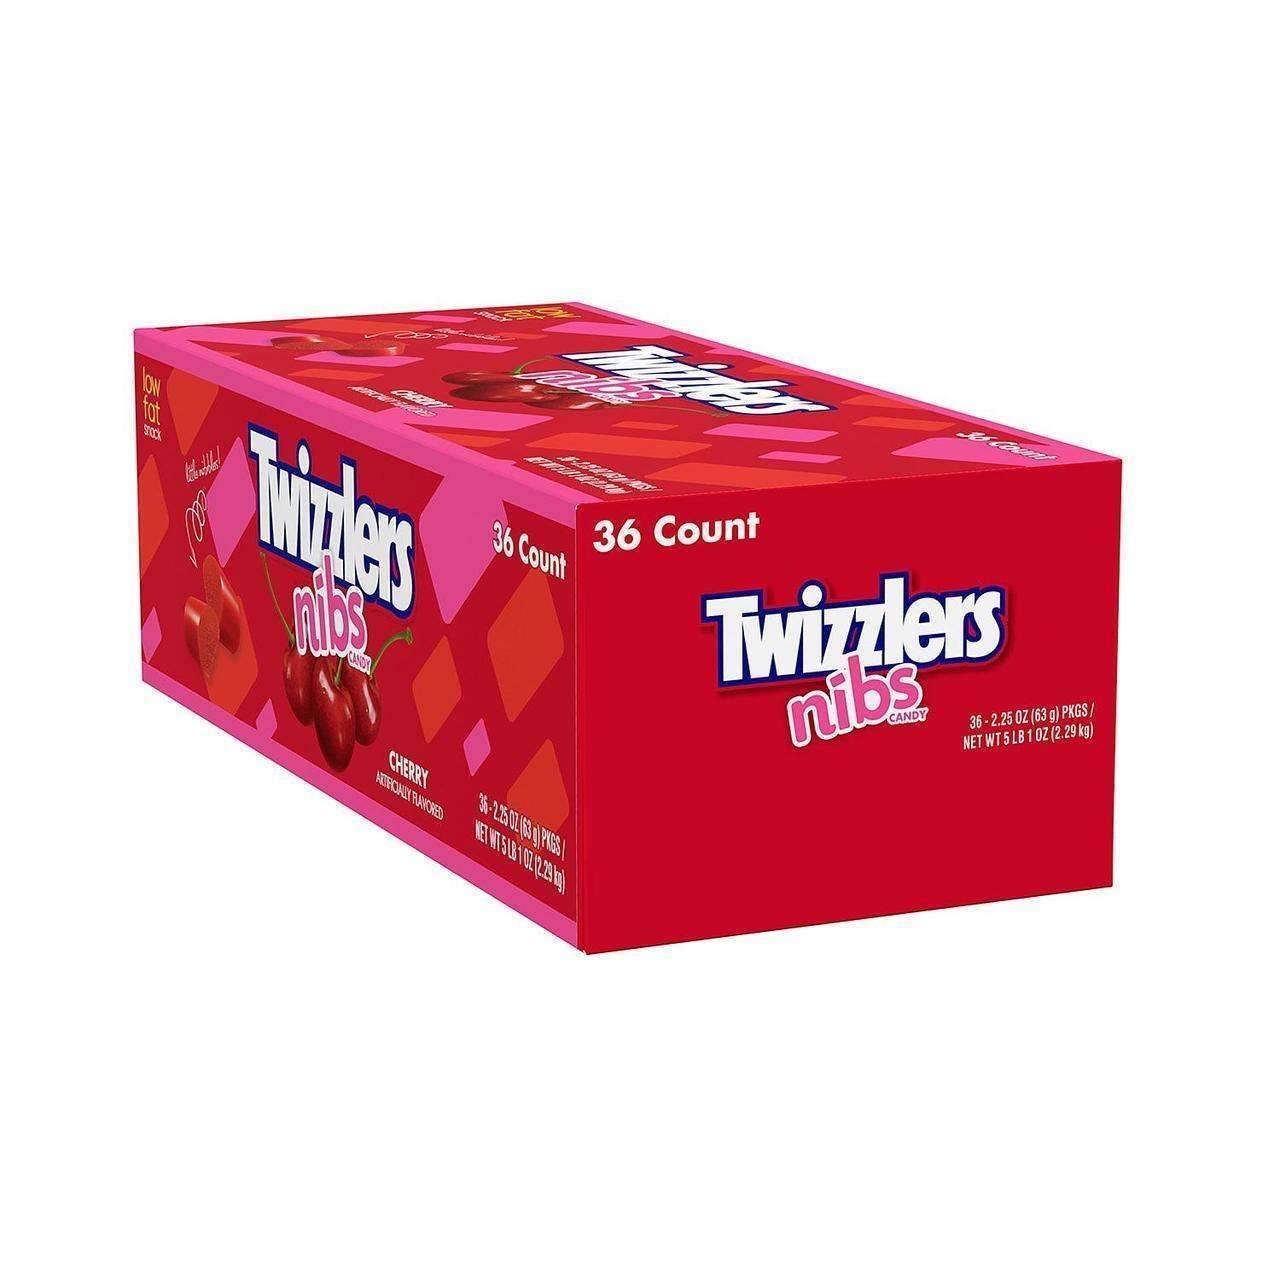 Twizzlers Nibs - Cherry